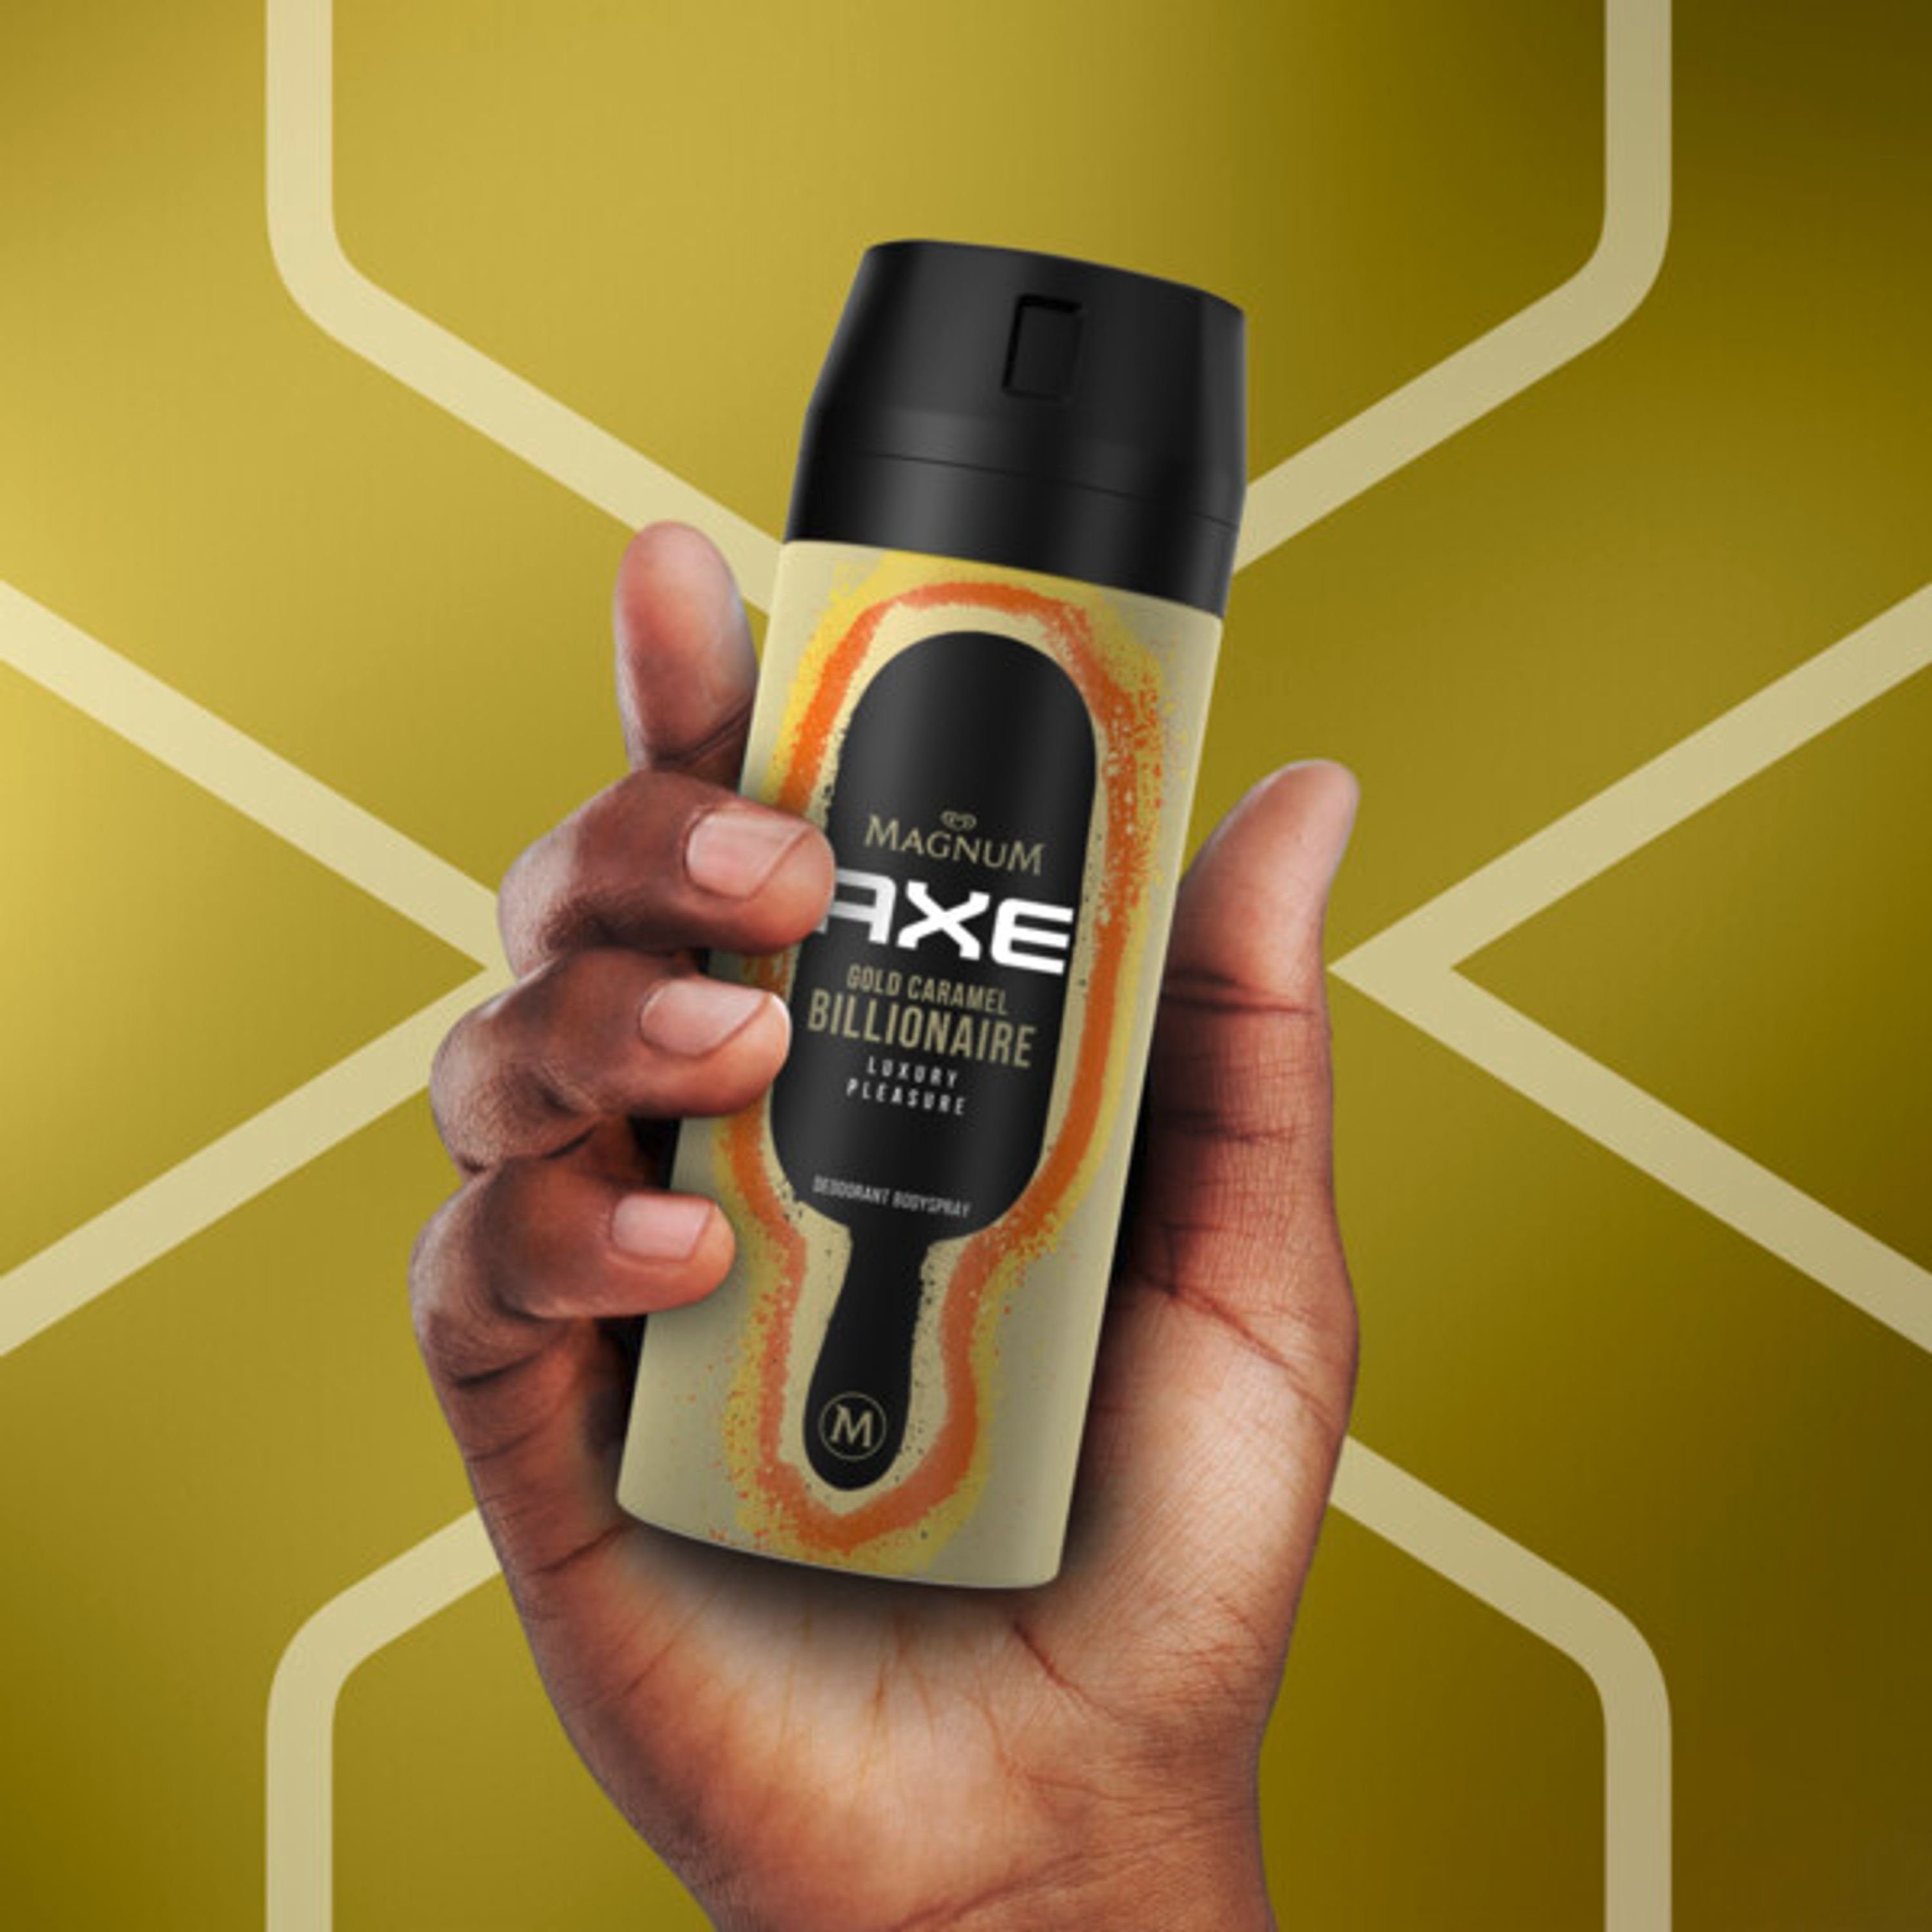 axe Deo-Set AXE Bodyspray Gold Billionaire 6x150ml Caramel Deo Edition Limited